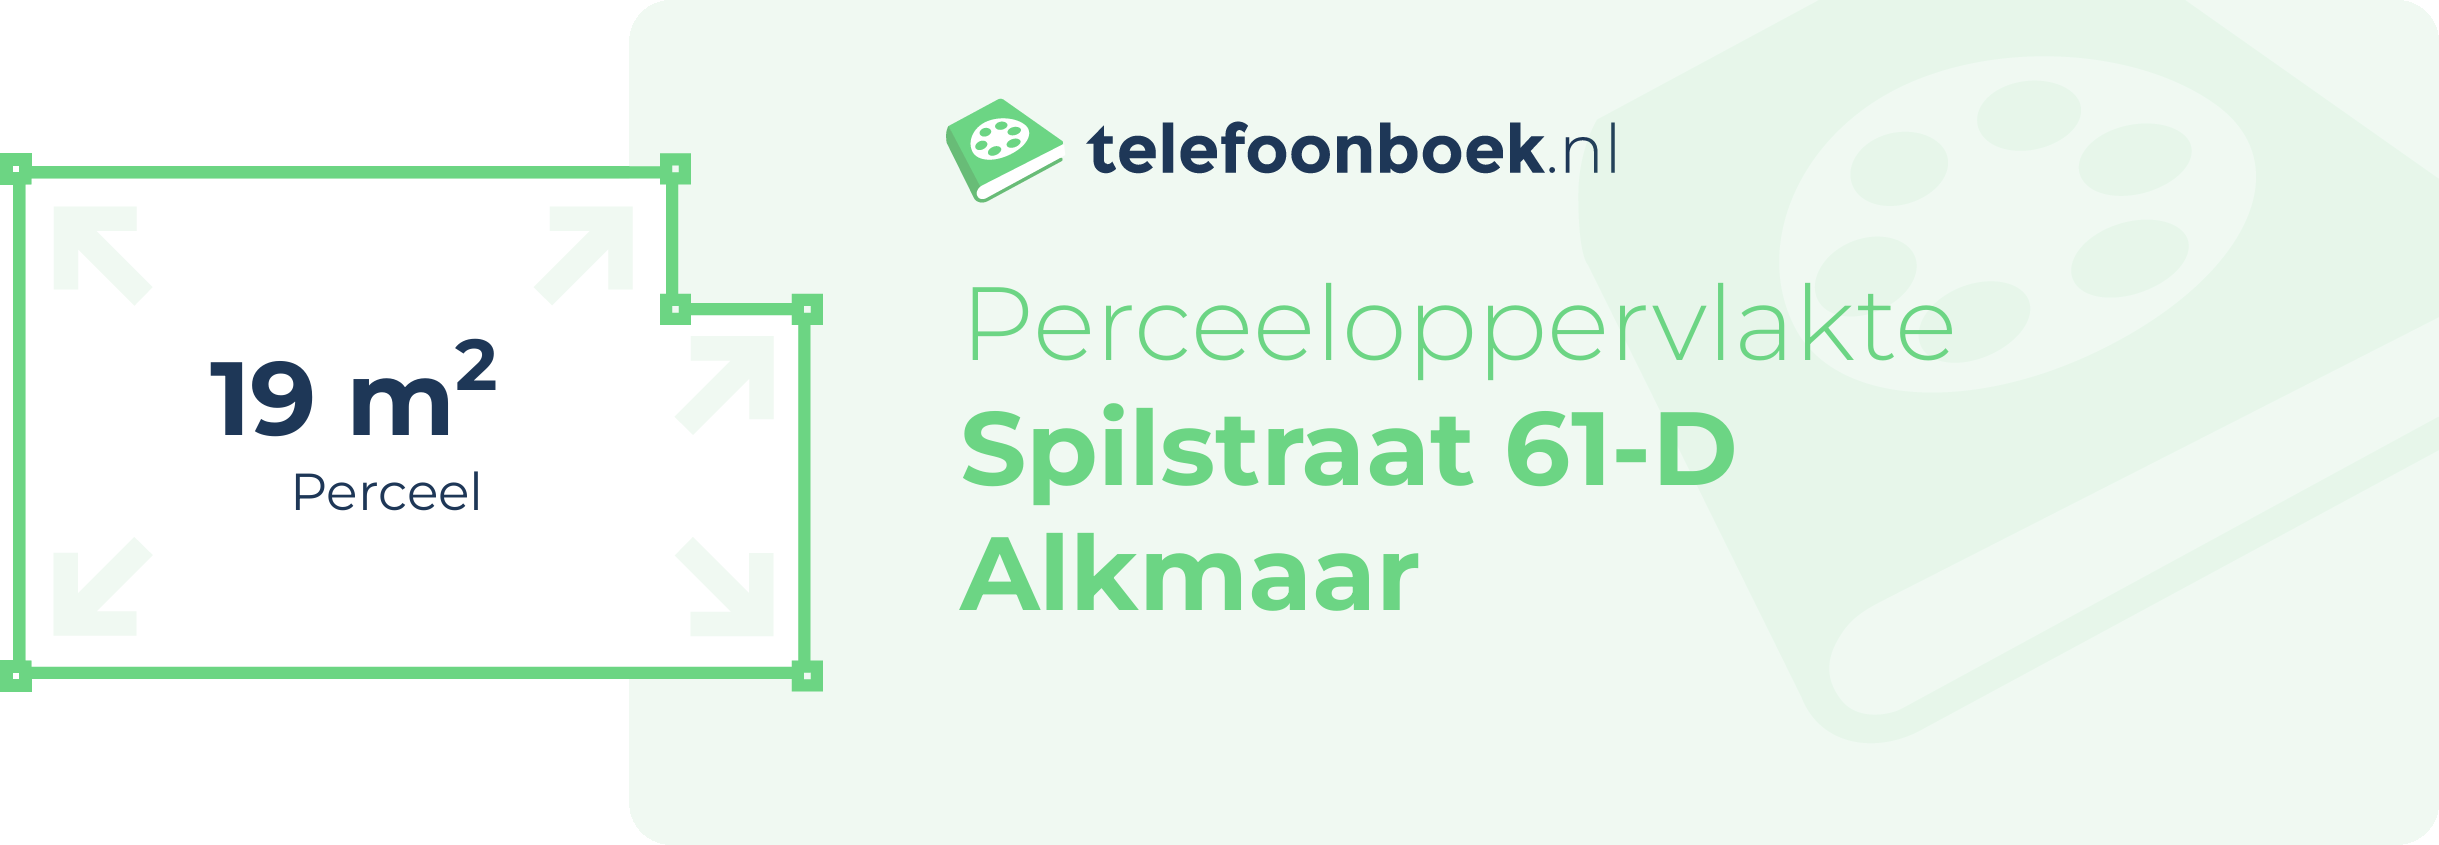 Perceeloppervlakte Spilstraat 61-D Alkmaar